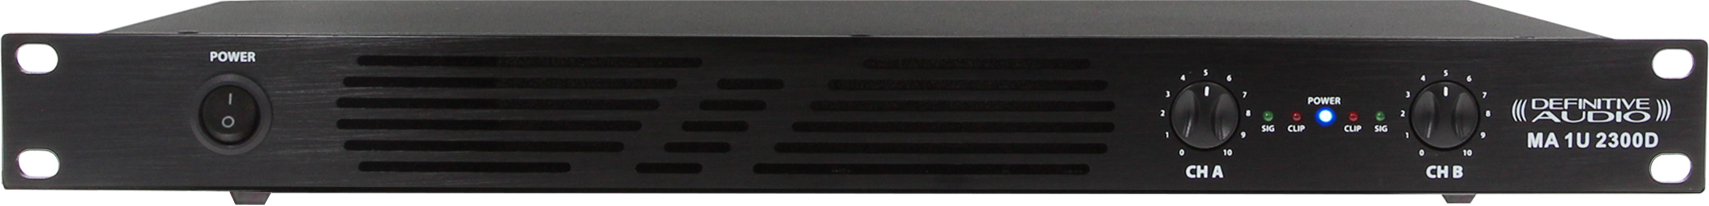 Definitive Audio Ma 1u 2300d - Stereo krachtversterker - Main picture